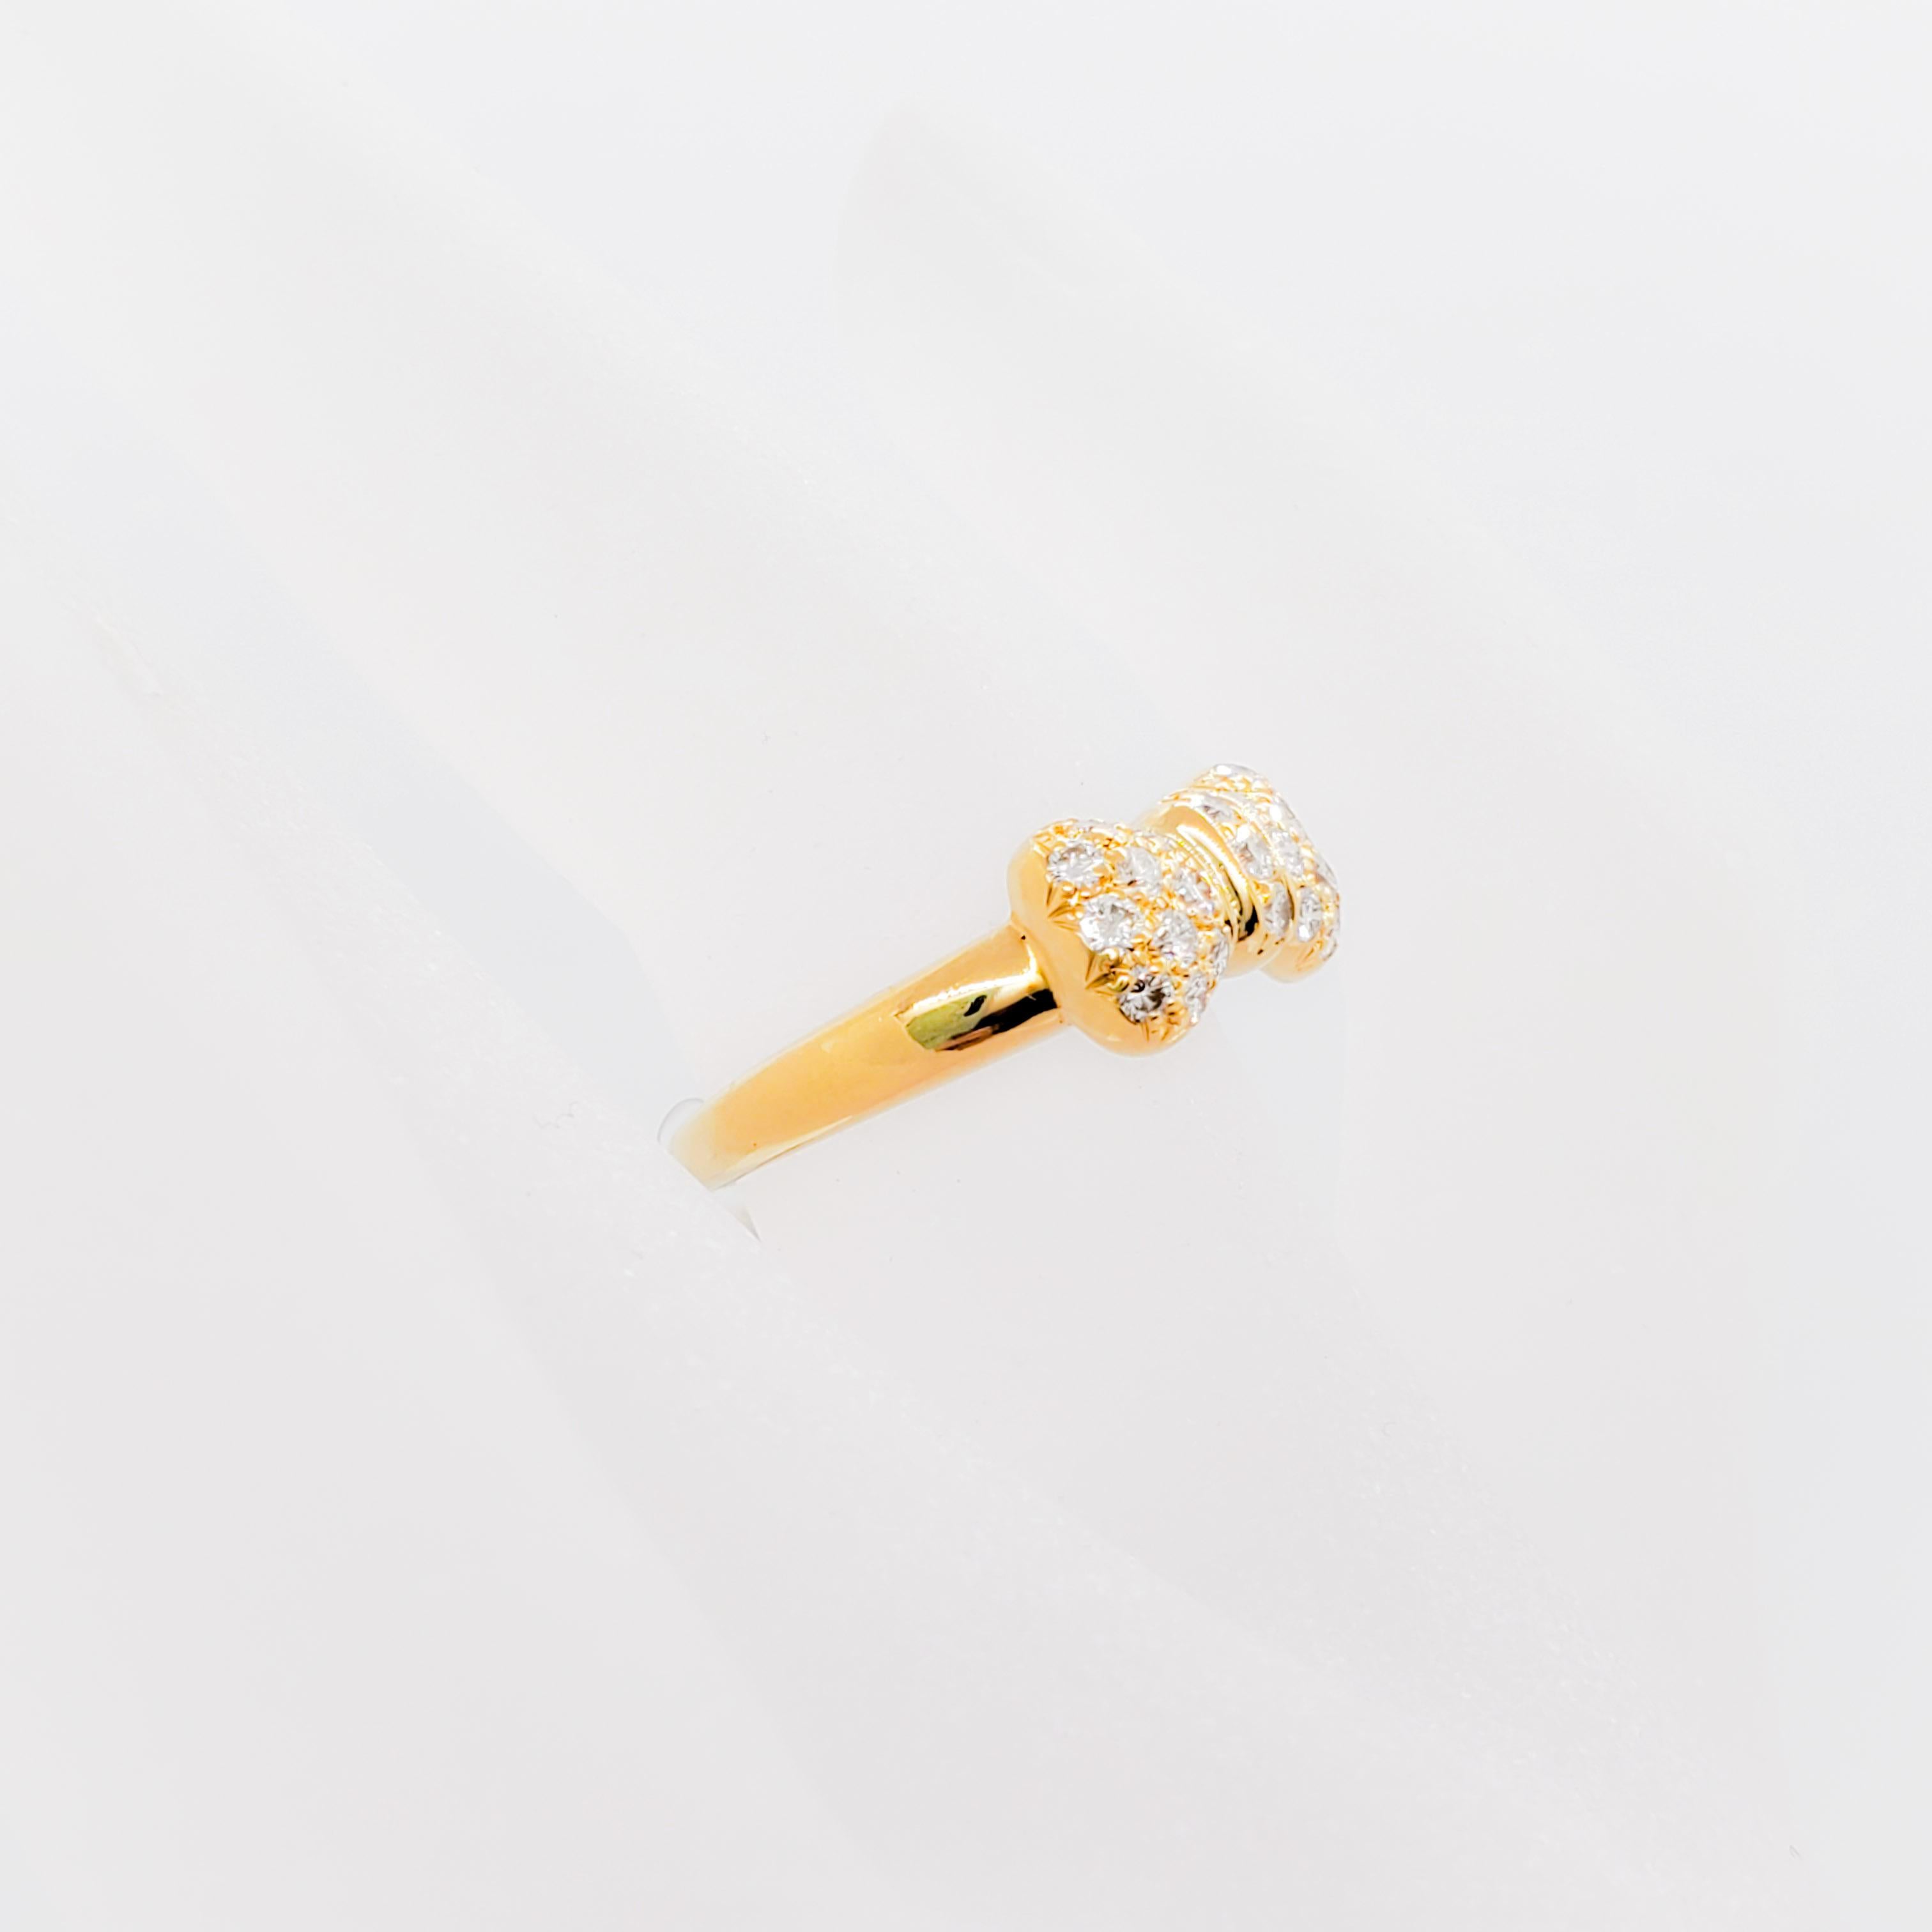 Women's or Men's Van Cleef & Arpels Estate Diamond Bow Ring in 18 Karat Yellow Gold